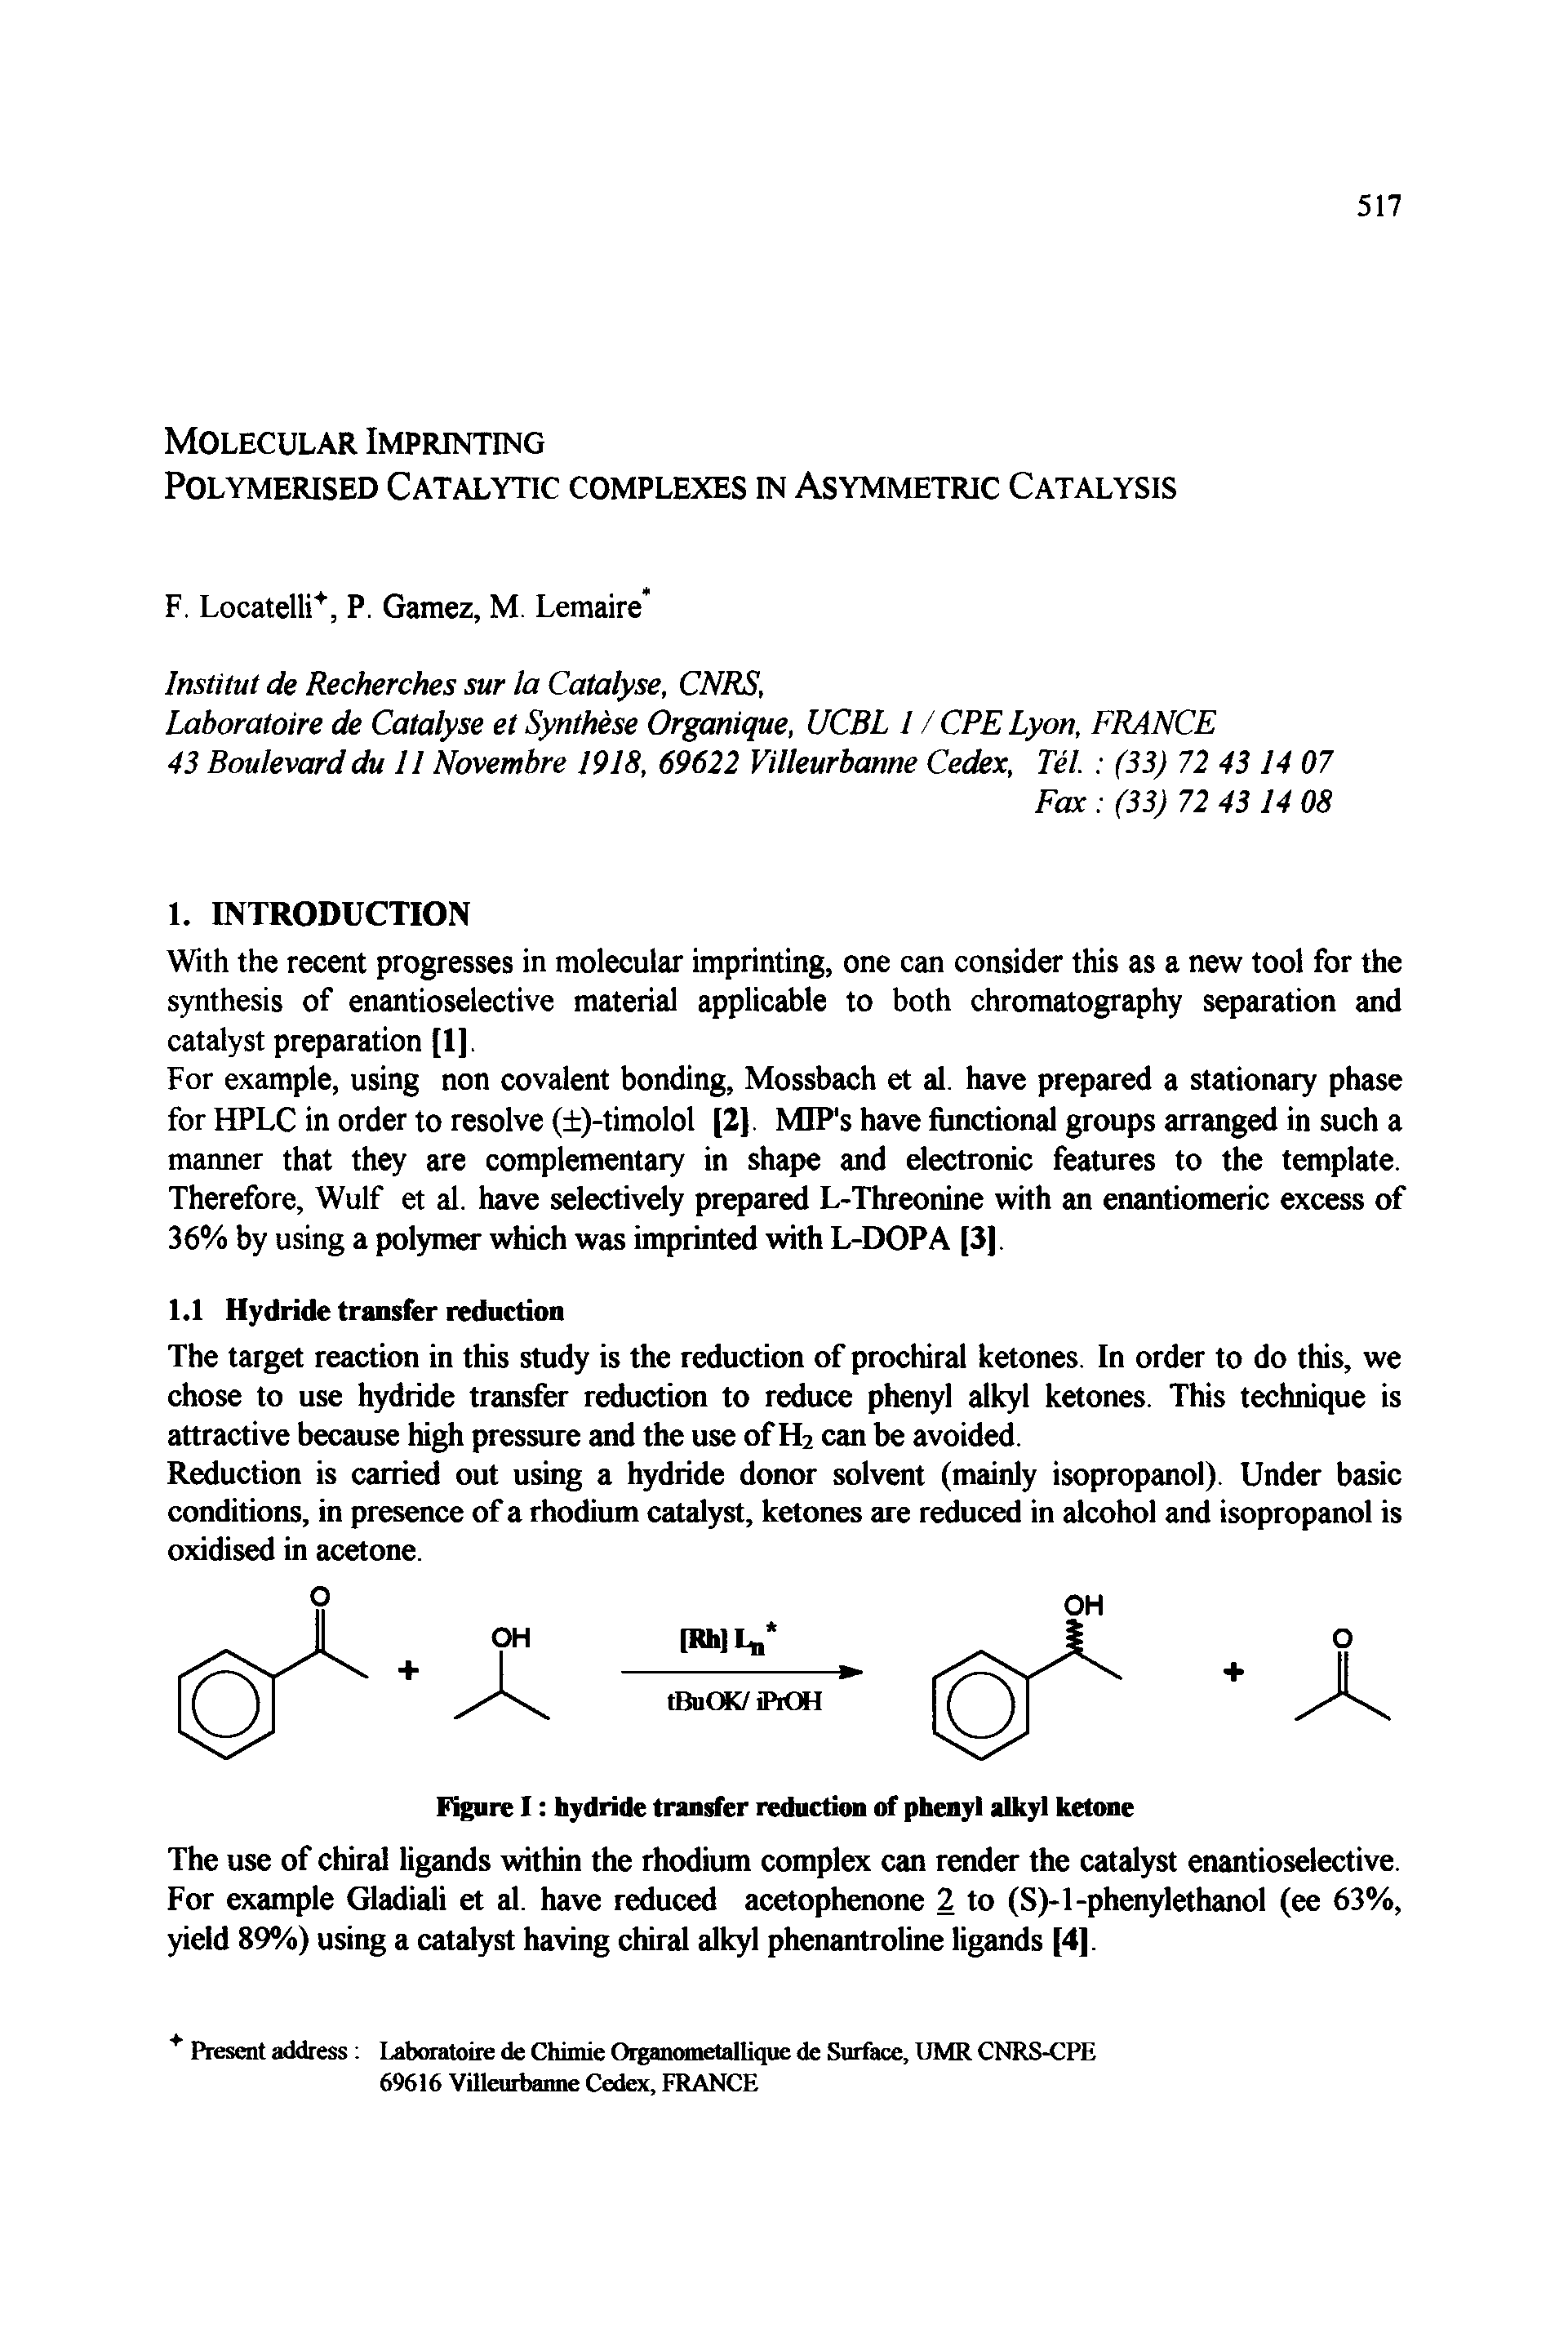 Figure I hydride transfer reduction of phenyl alkyl ketone...